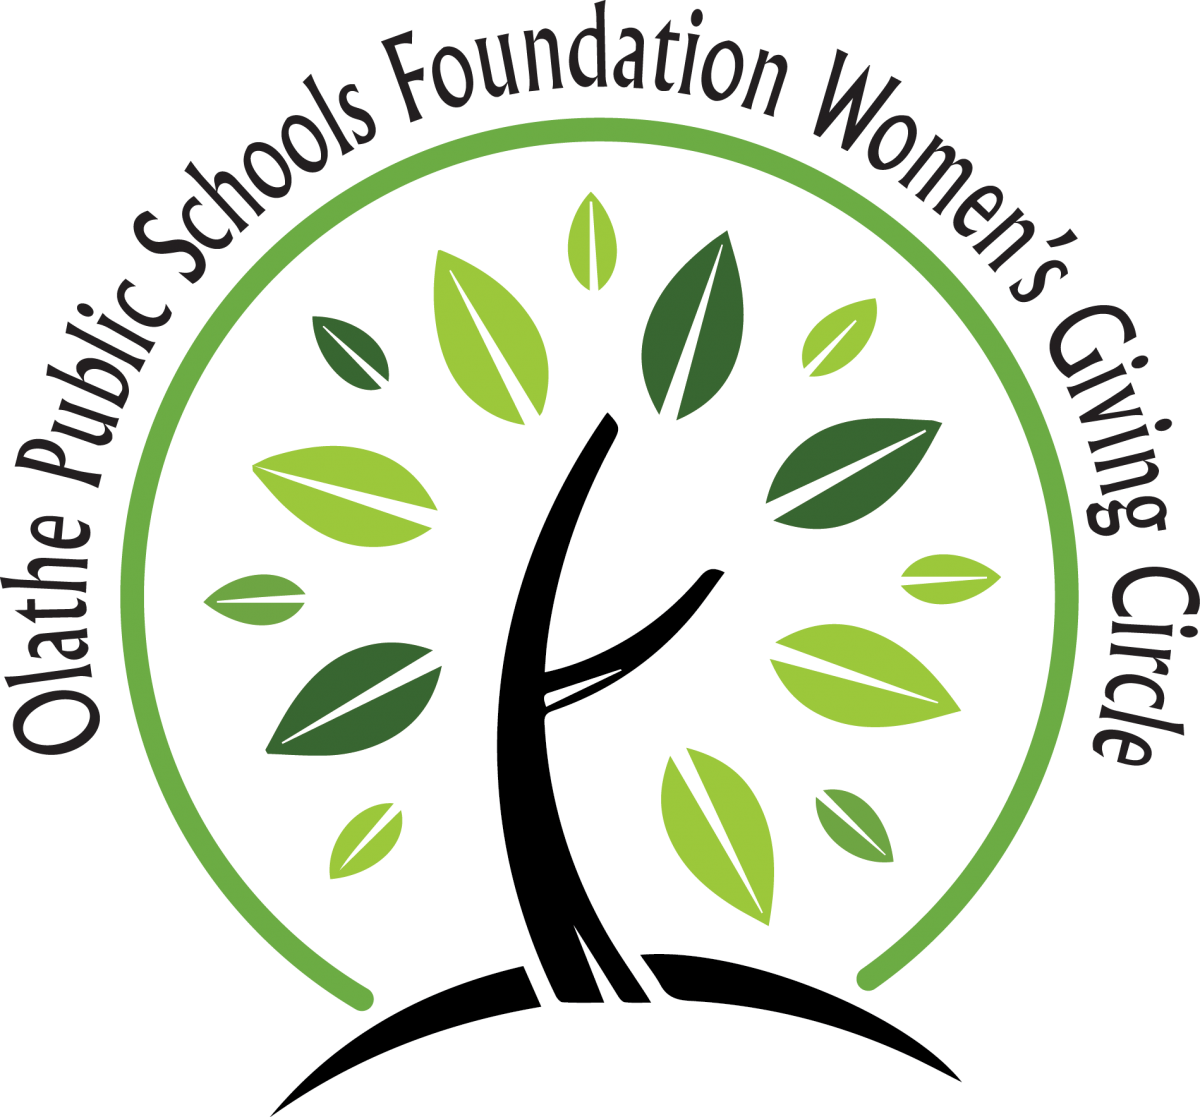 Women's Gathering  Rogers Behavioral Health Foundation